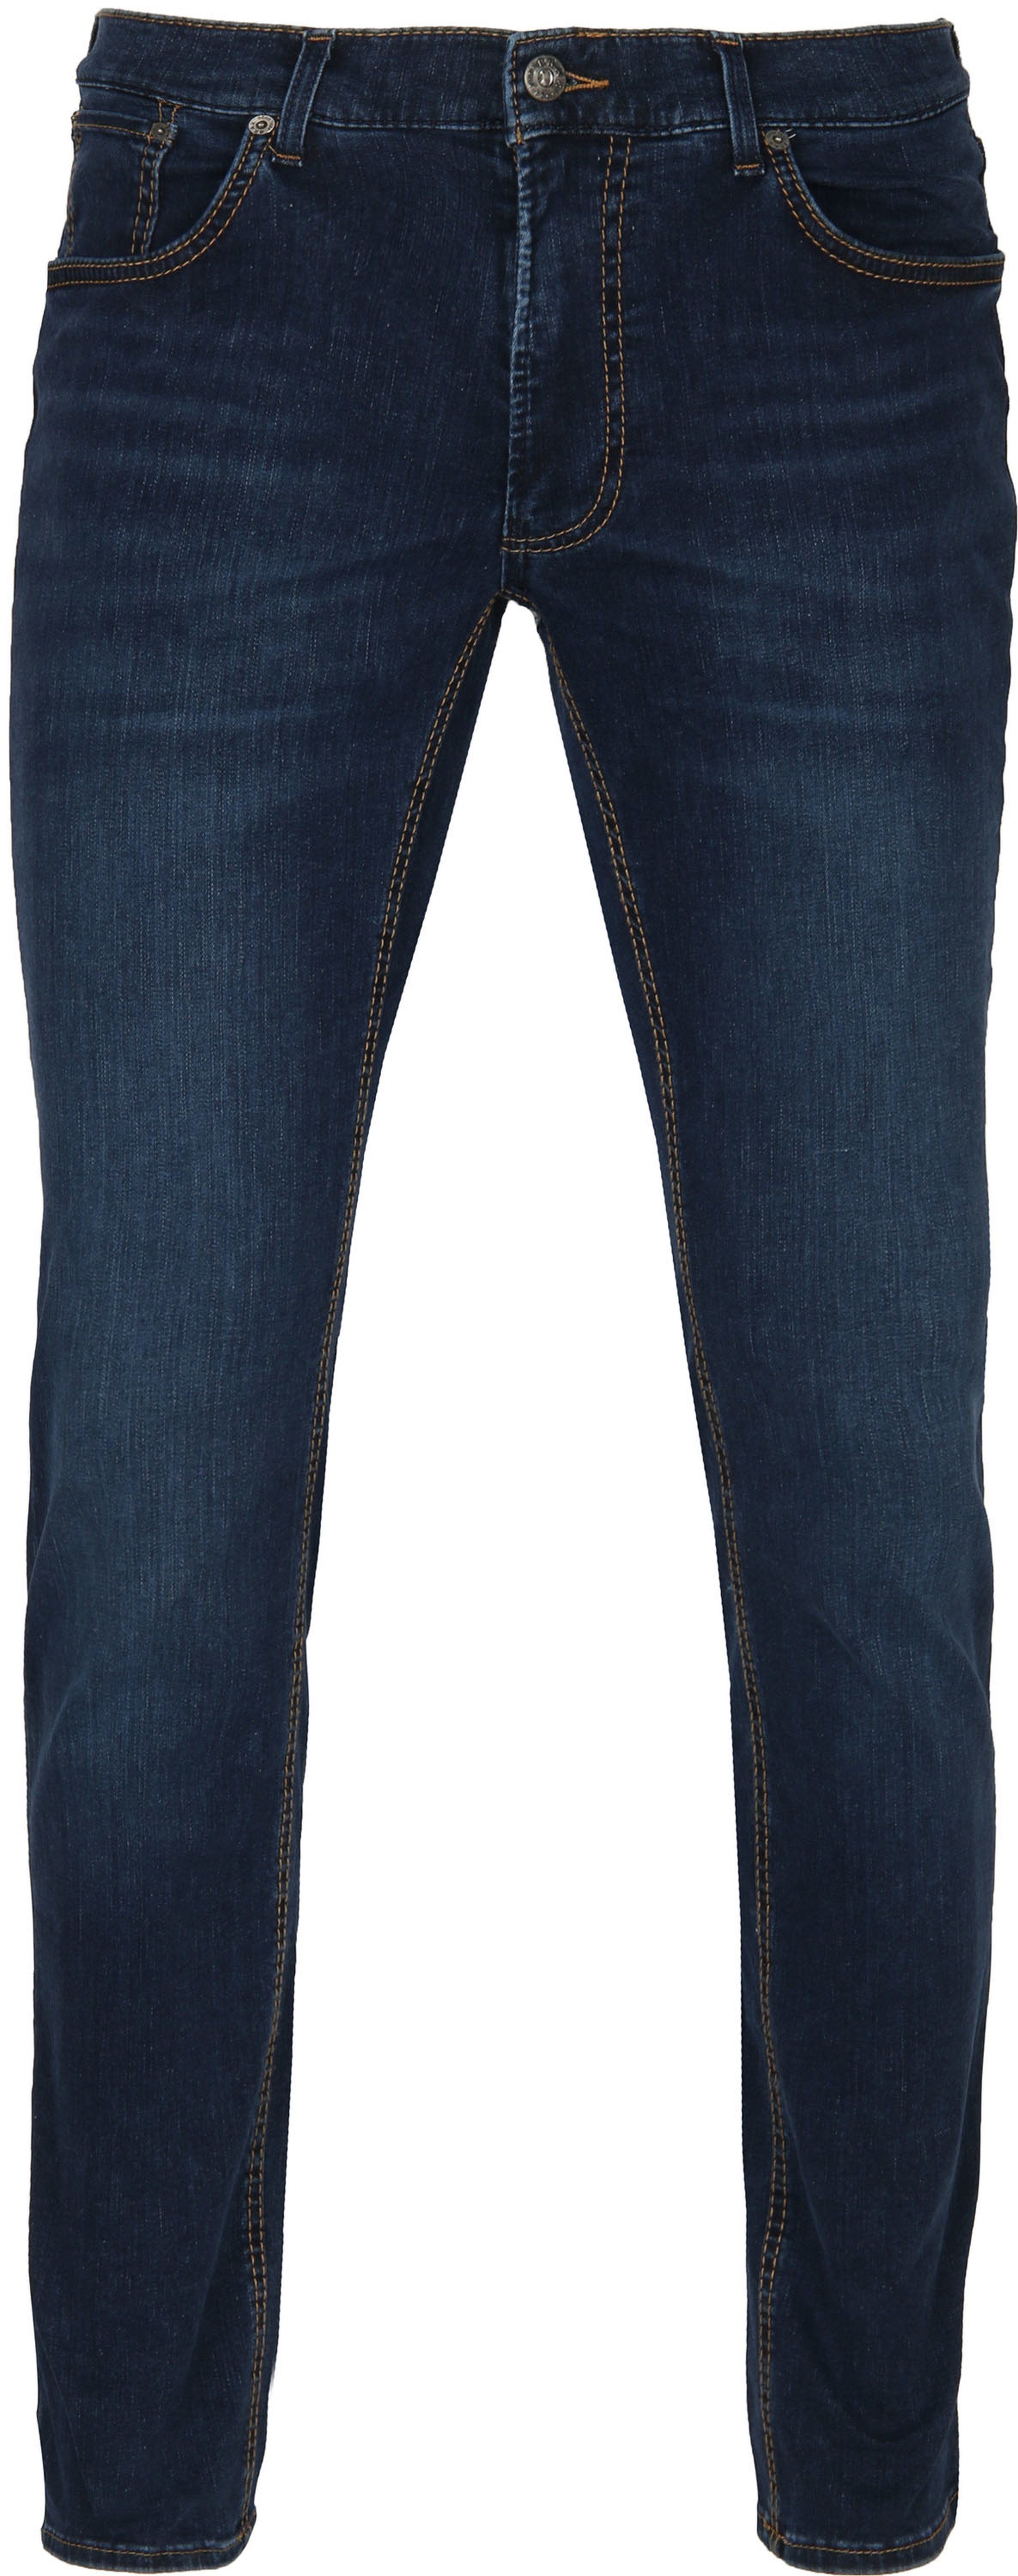 Brax Chuck Denim Jeans Blue size W 33